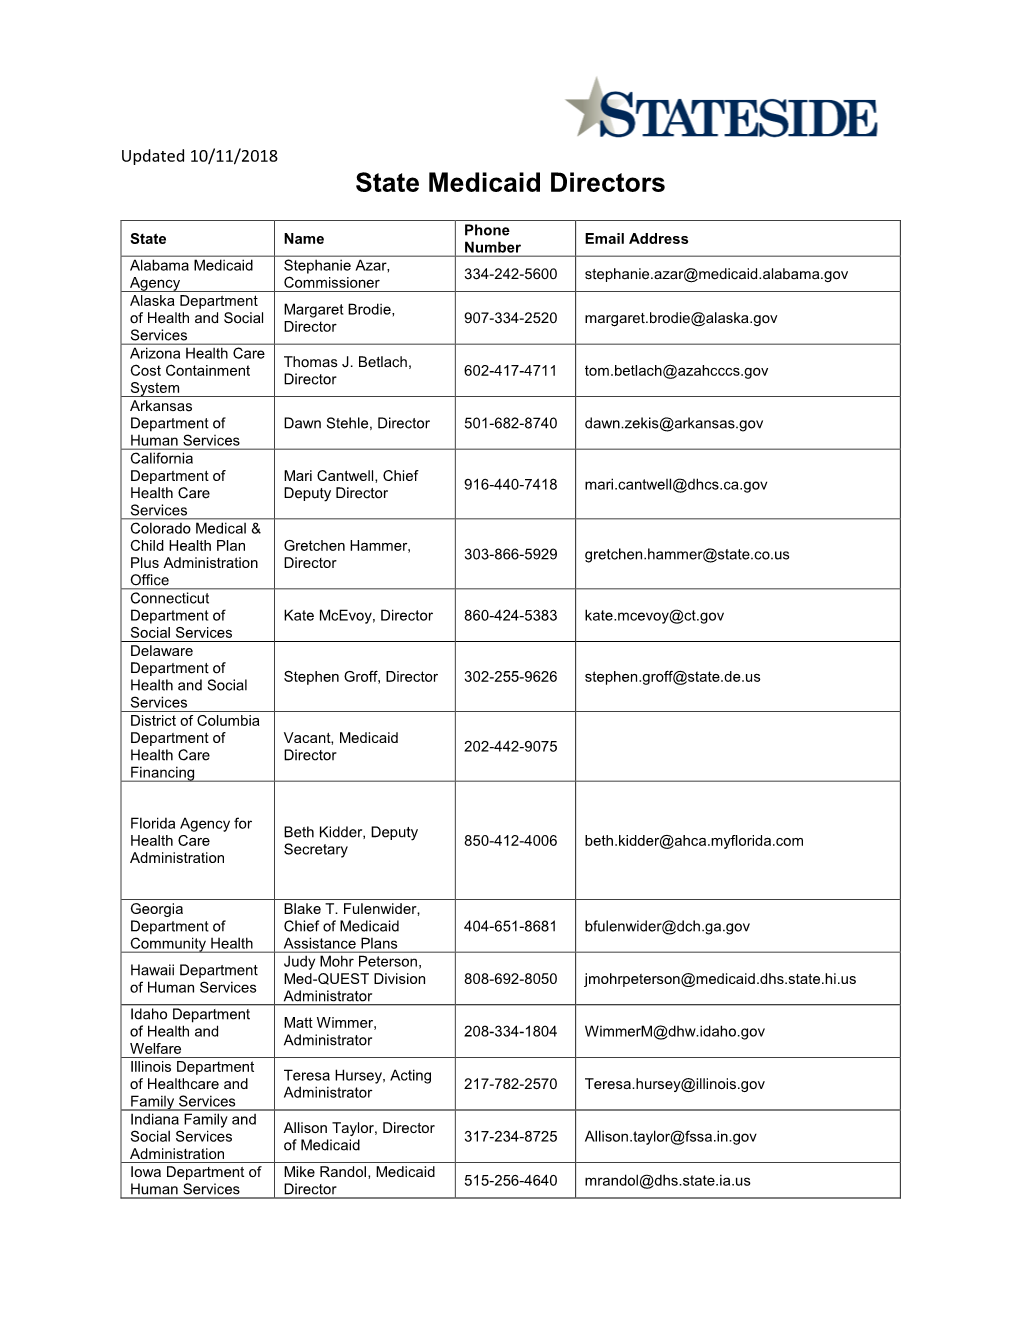 State Medicaid Directors